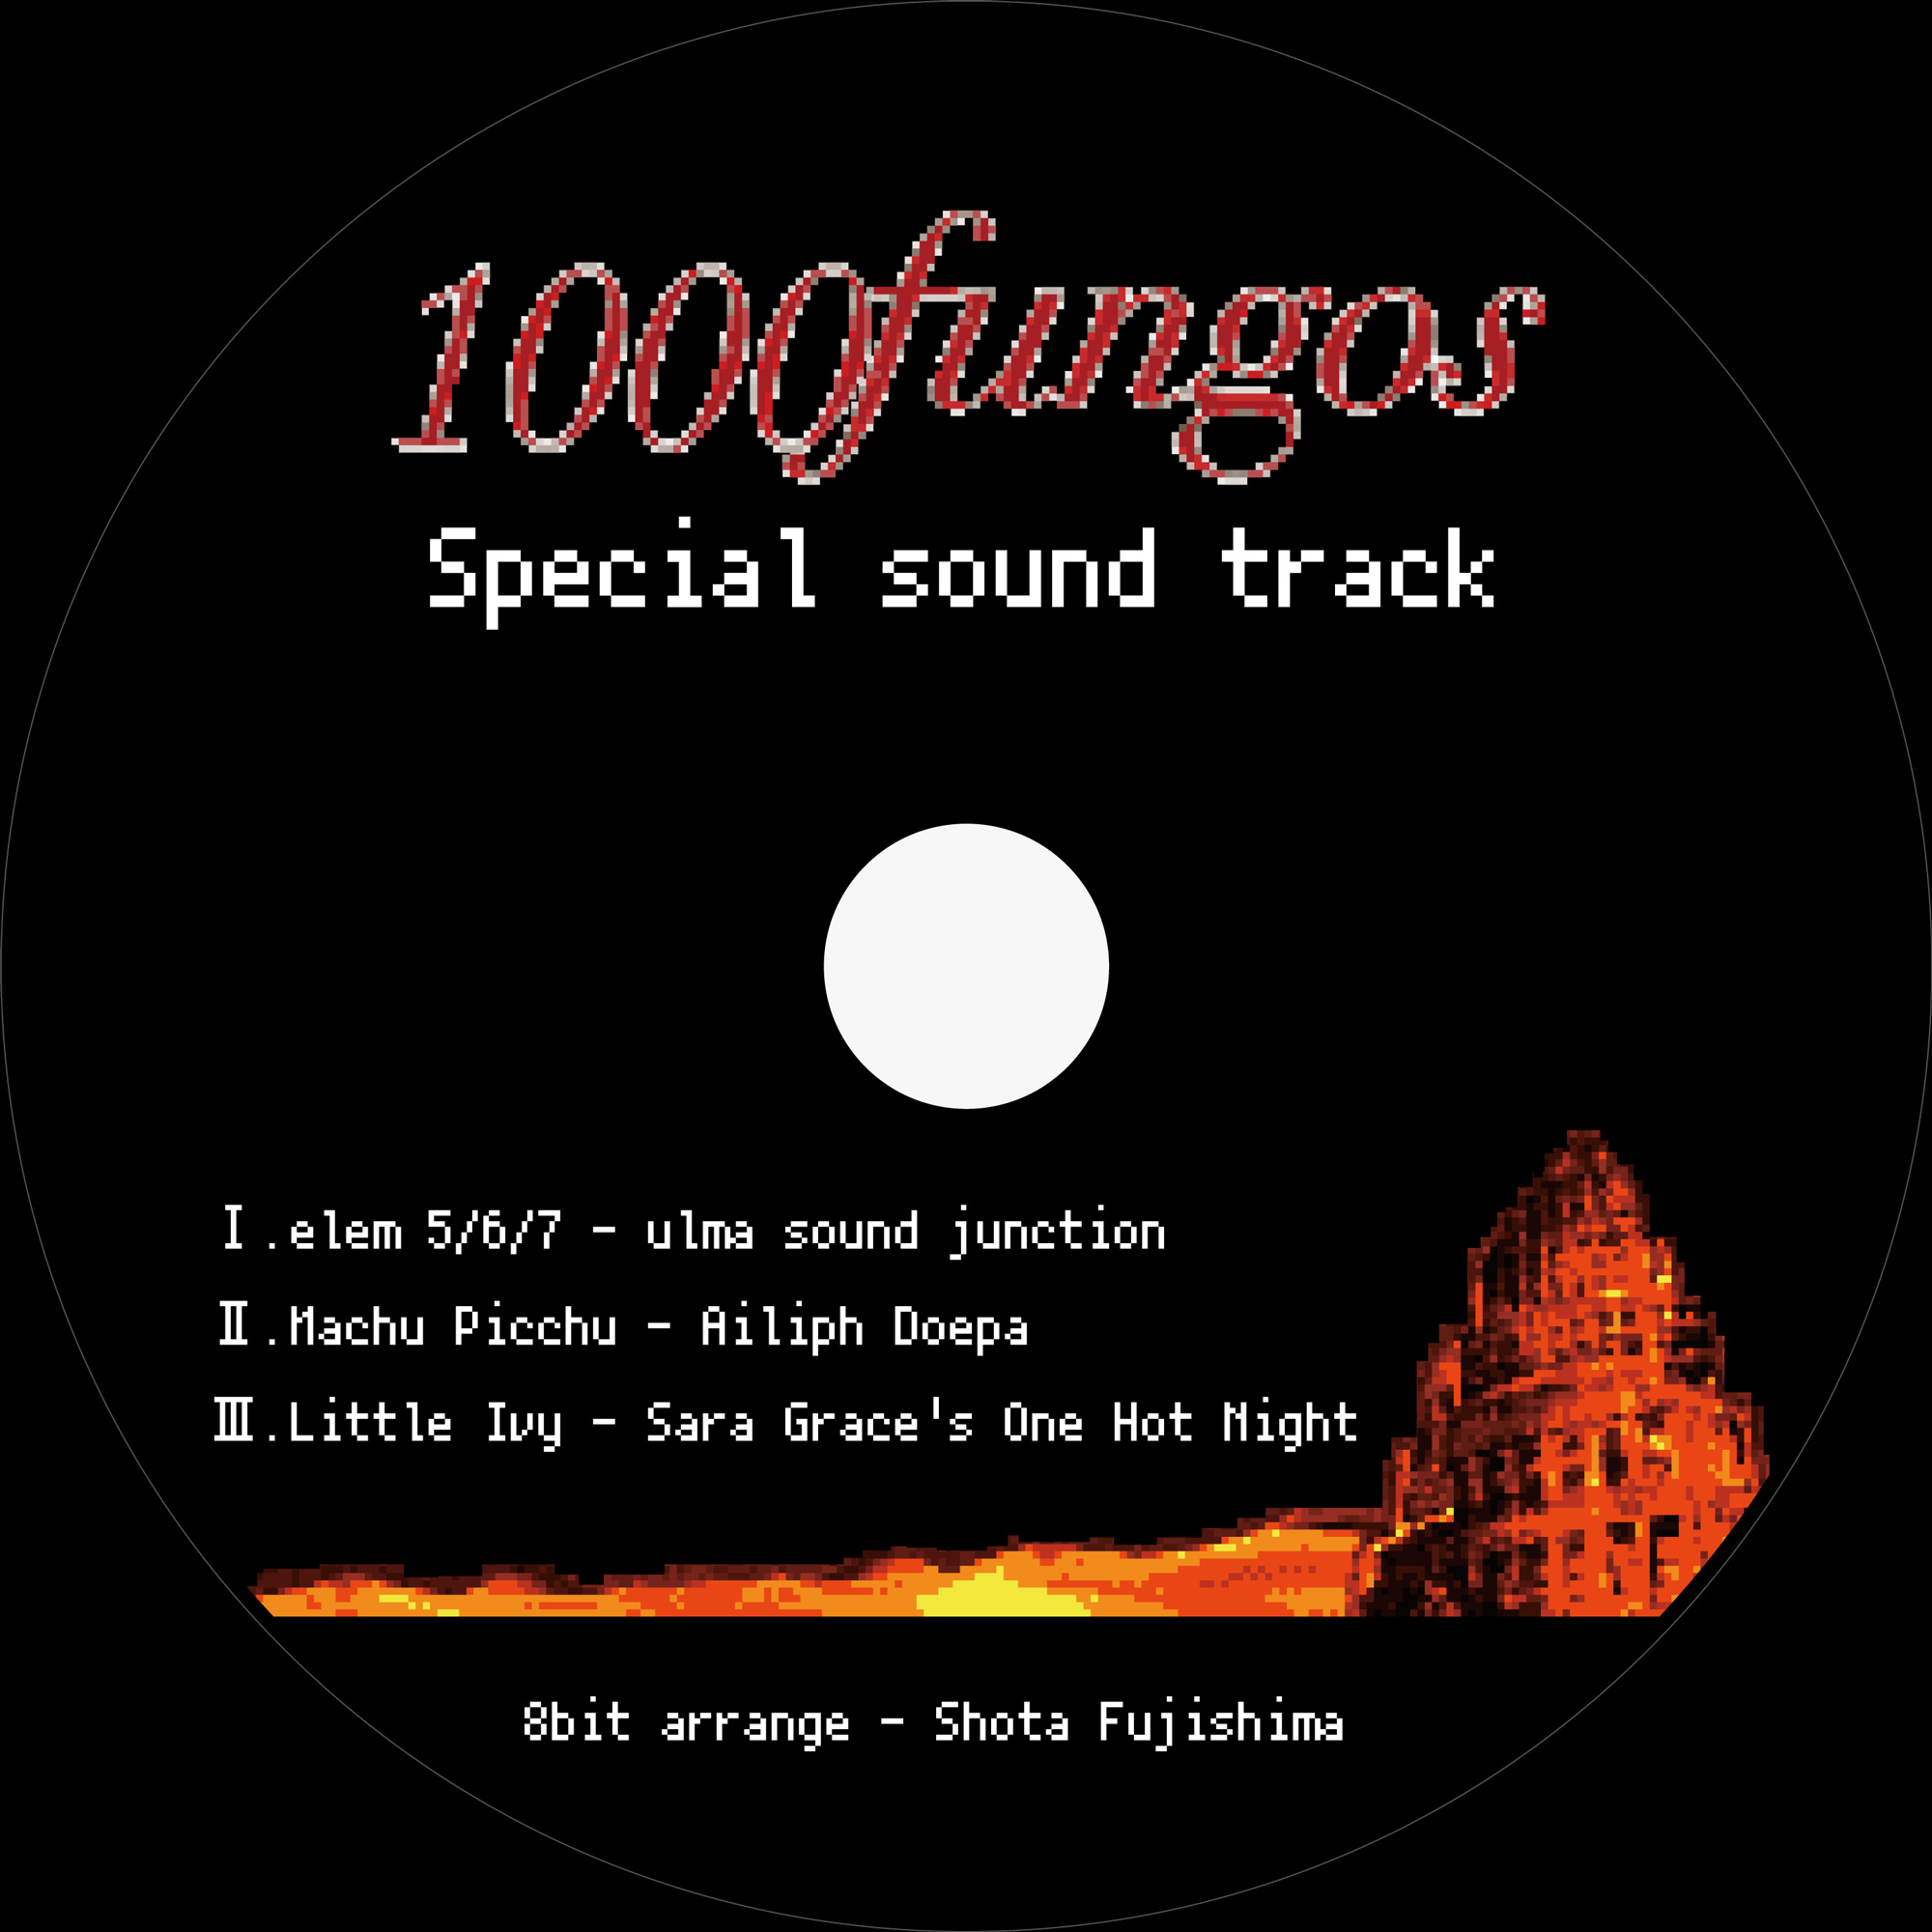 1000 fungos -special sound track-ジャケットイメージ